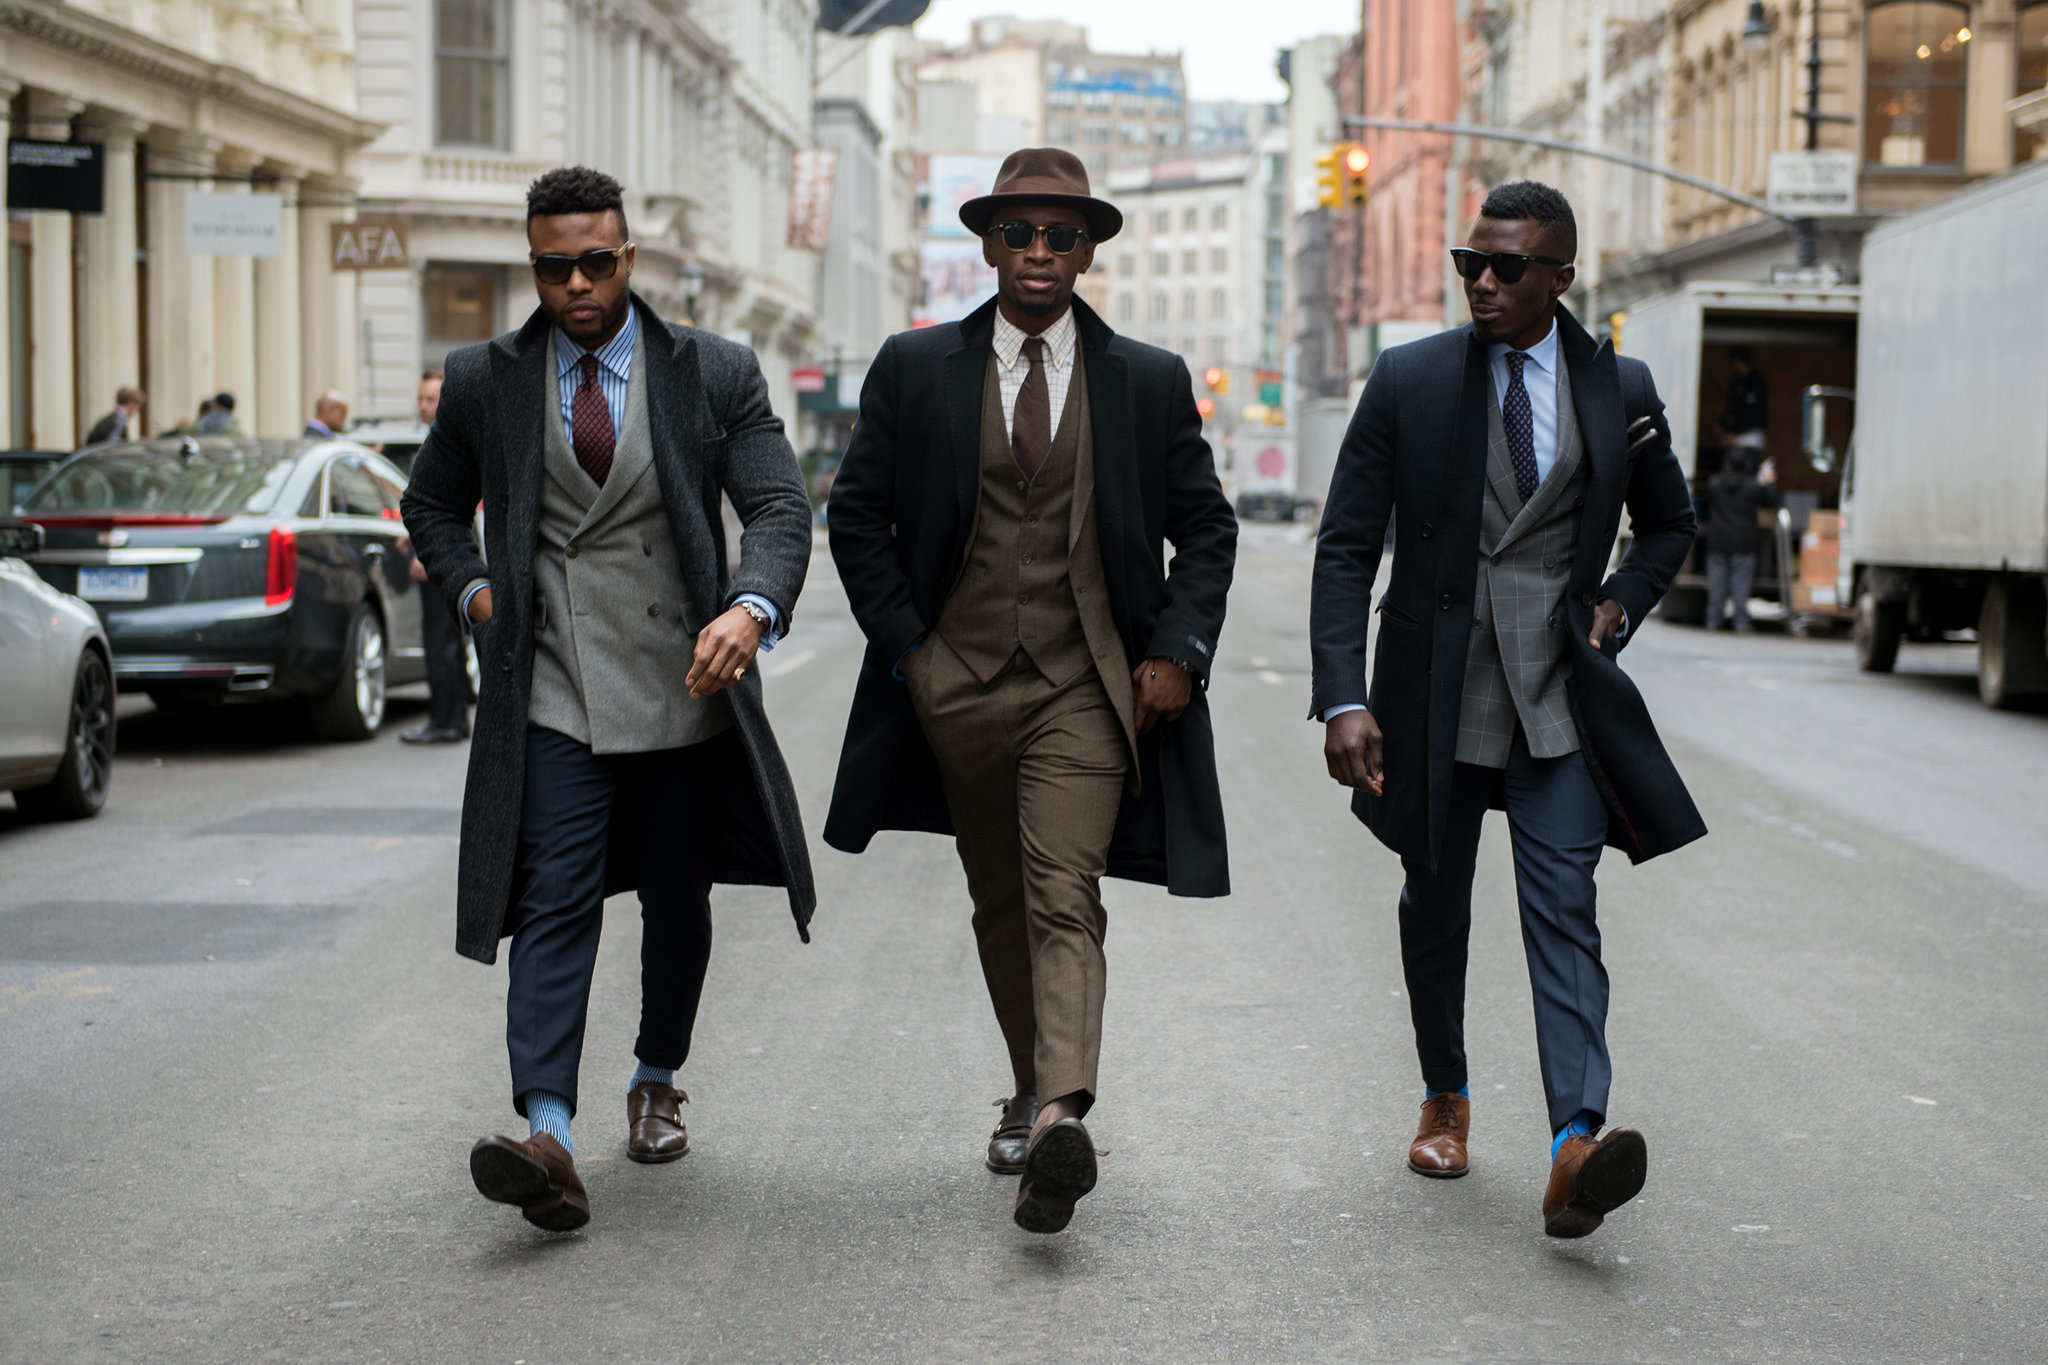 classy black men in suits walking on the street